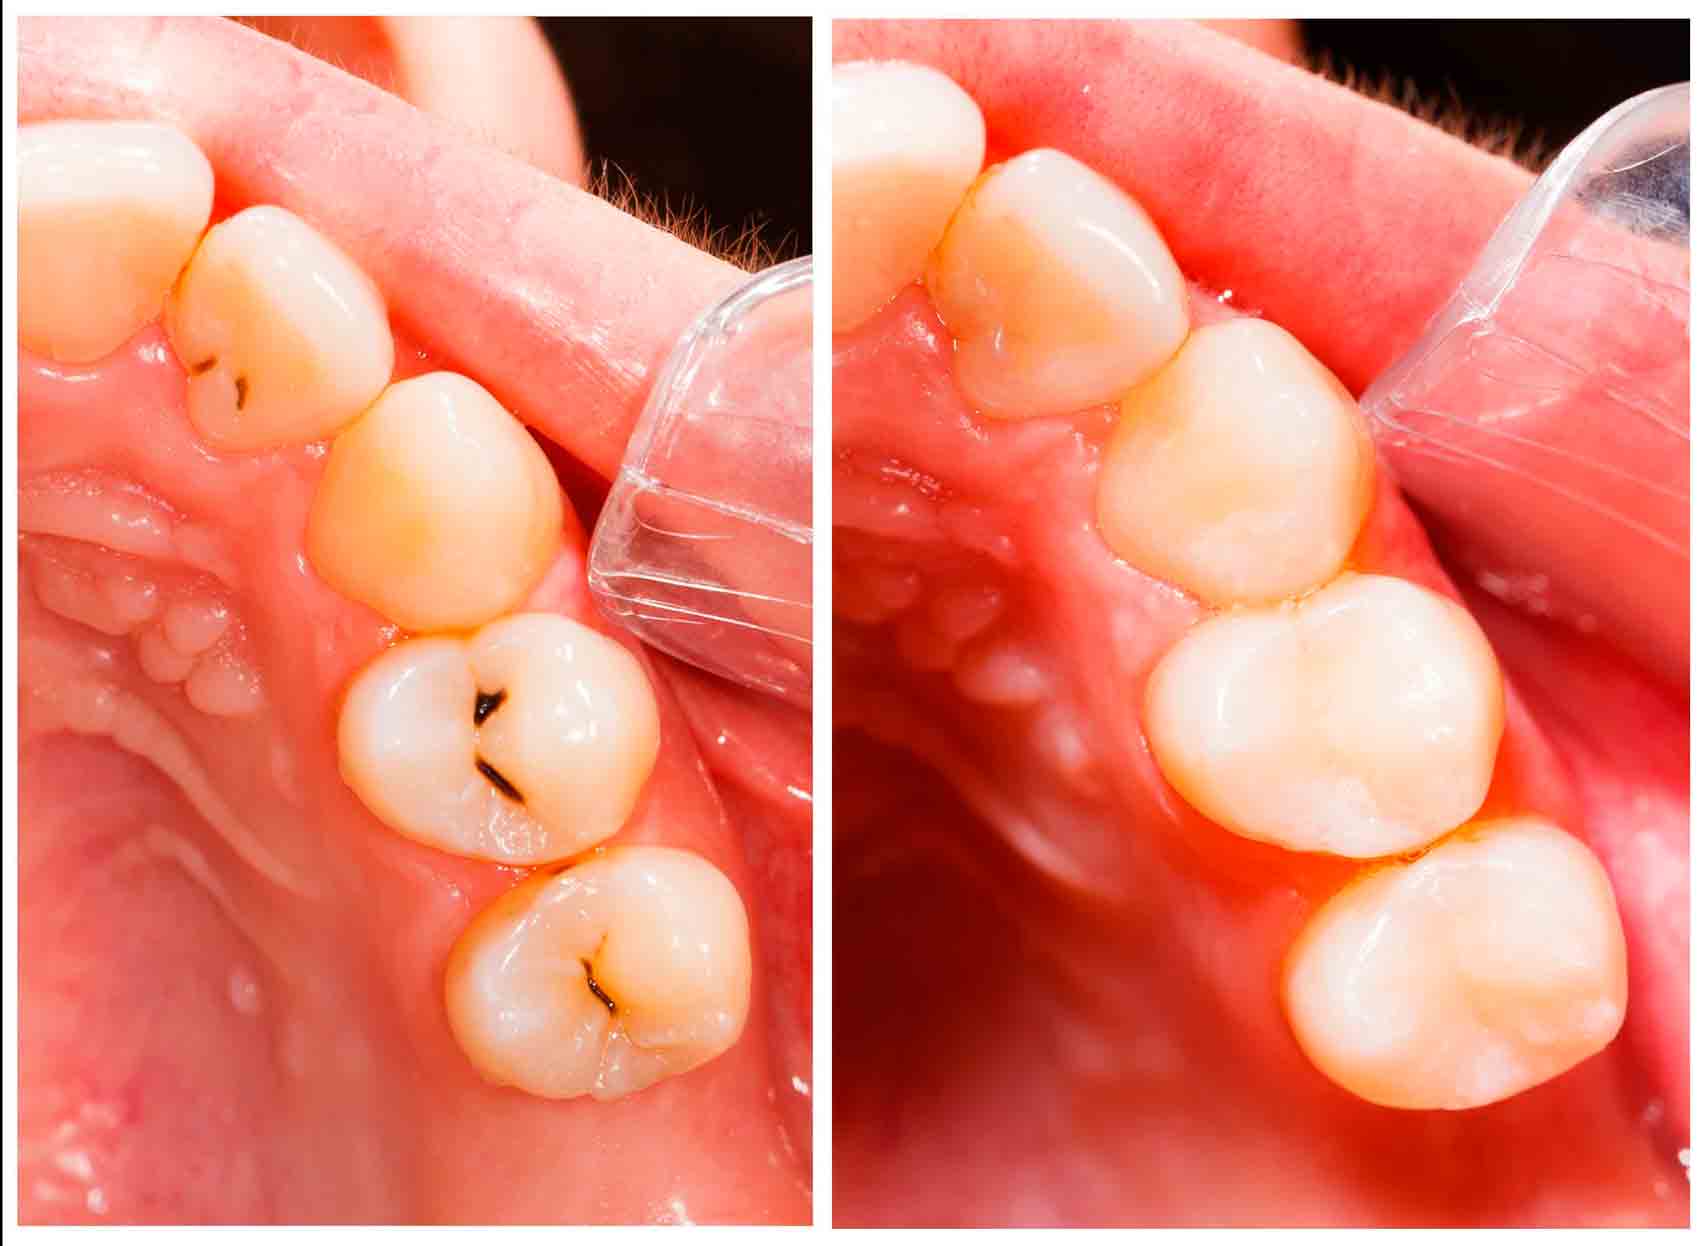 фото лечение глубокого кариеса зубов